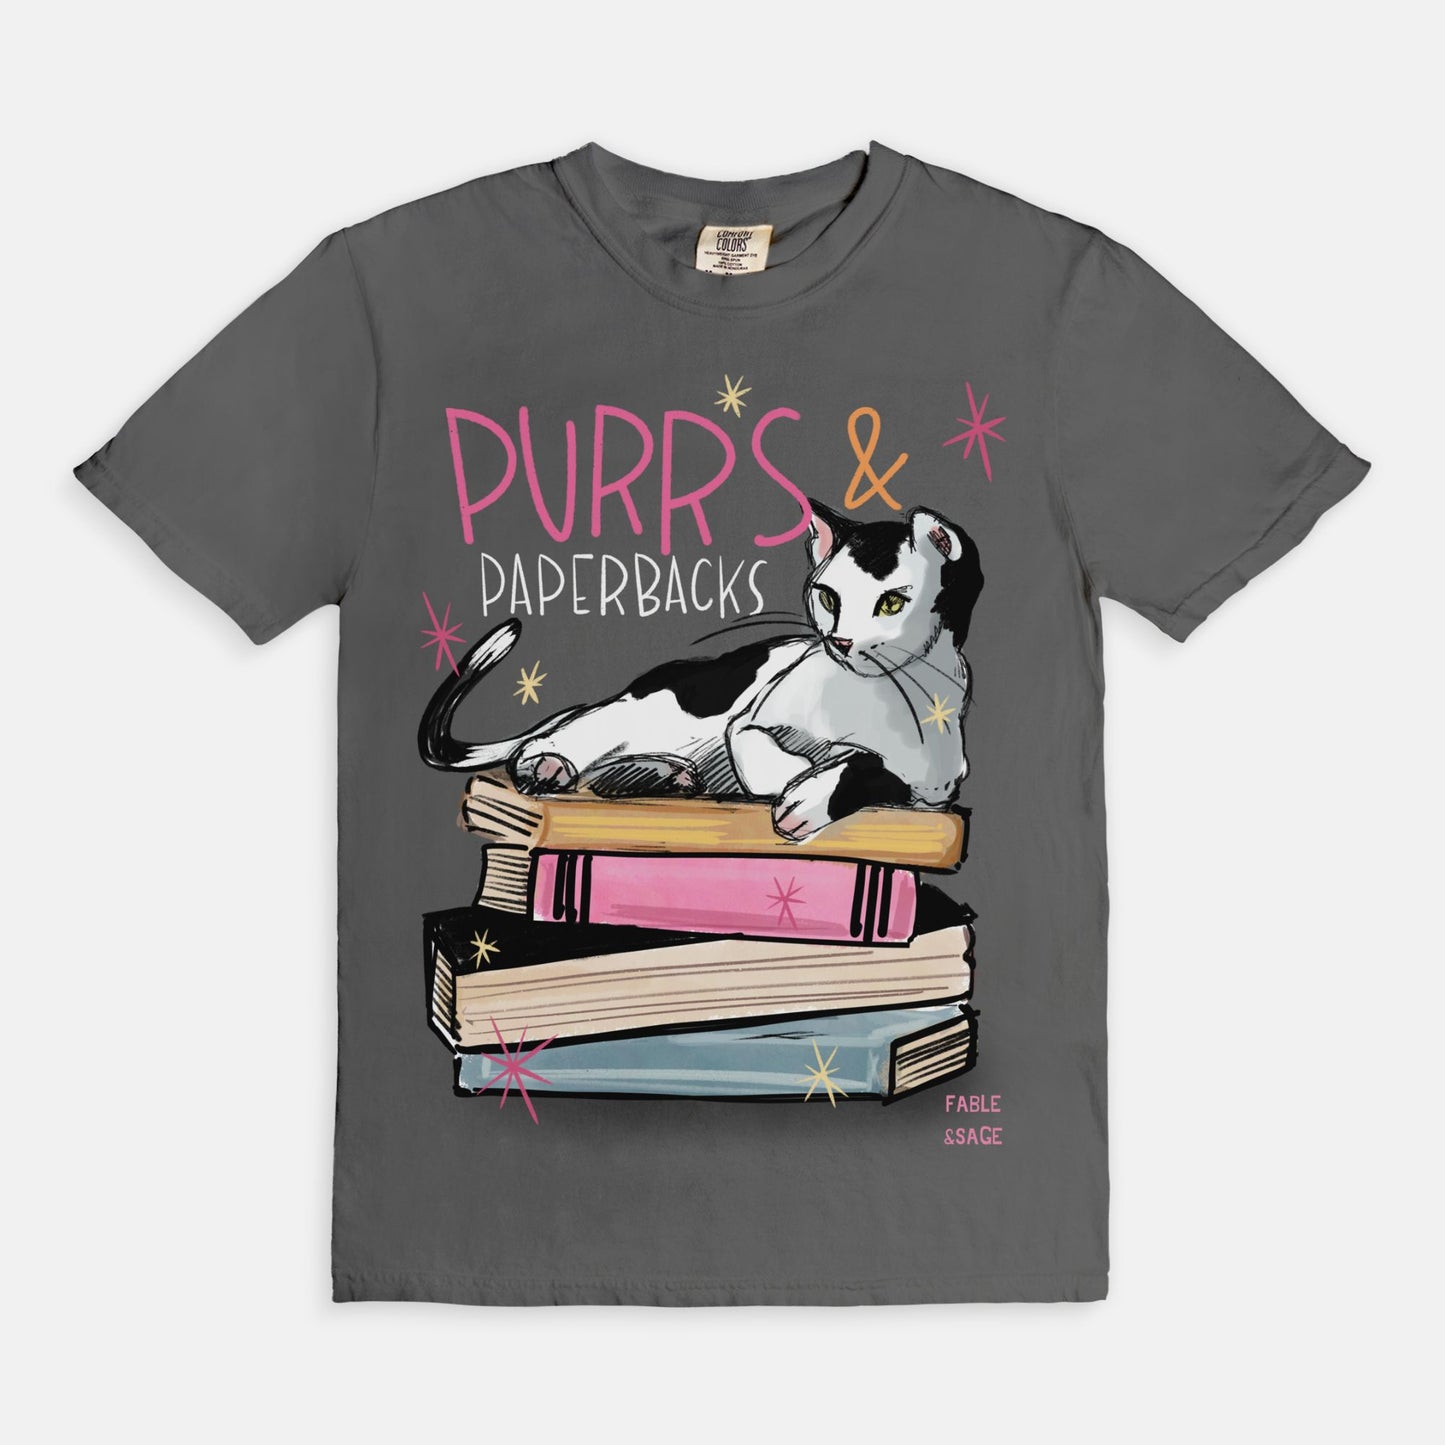 Purrs & Paperbacks T-Shirt